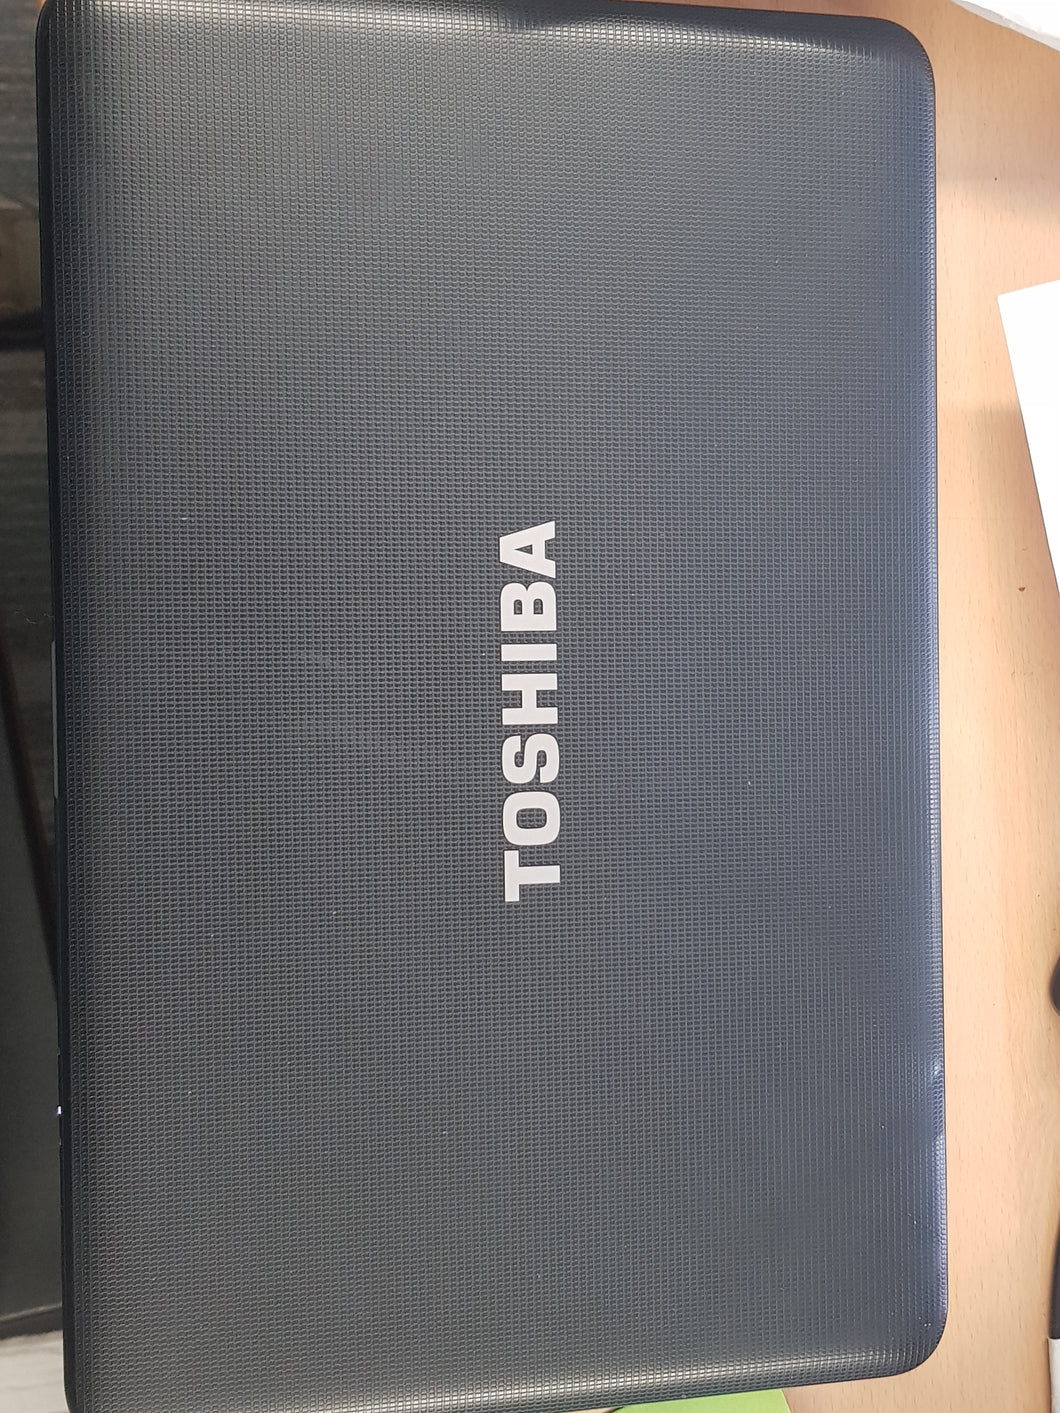 Refurb laptop Toshiba C850. 9months warranty